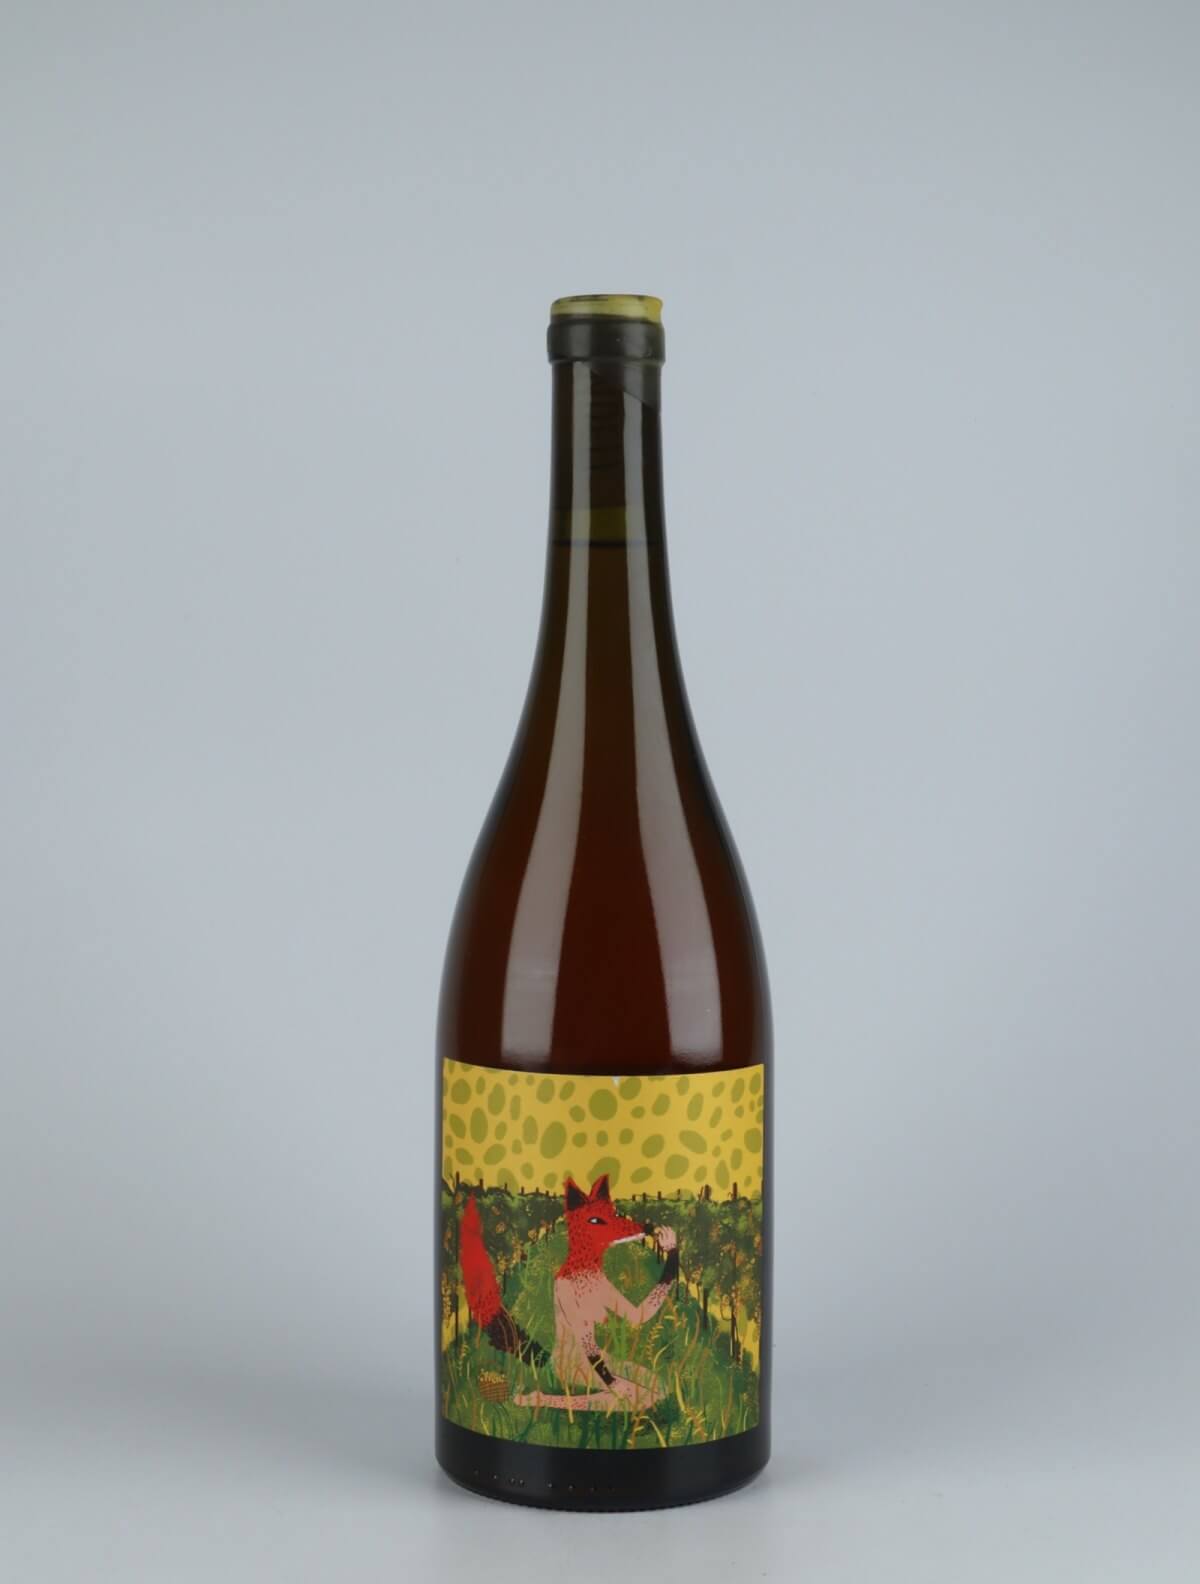 En flaske 2020 Otono Orange vin fra Kindeli, Nelson i New Zealand